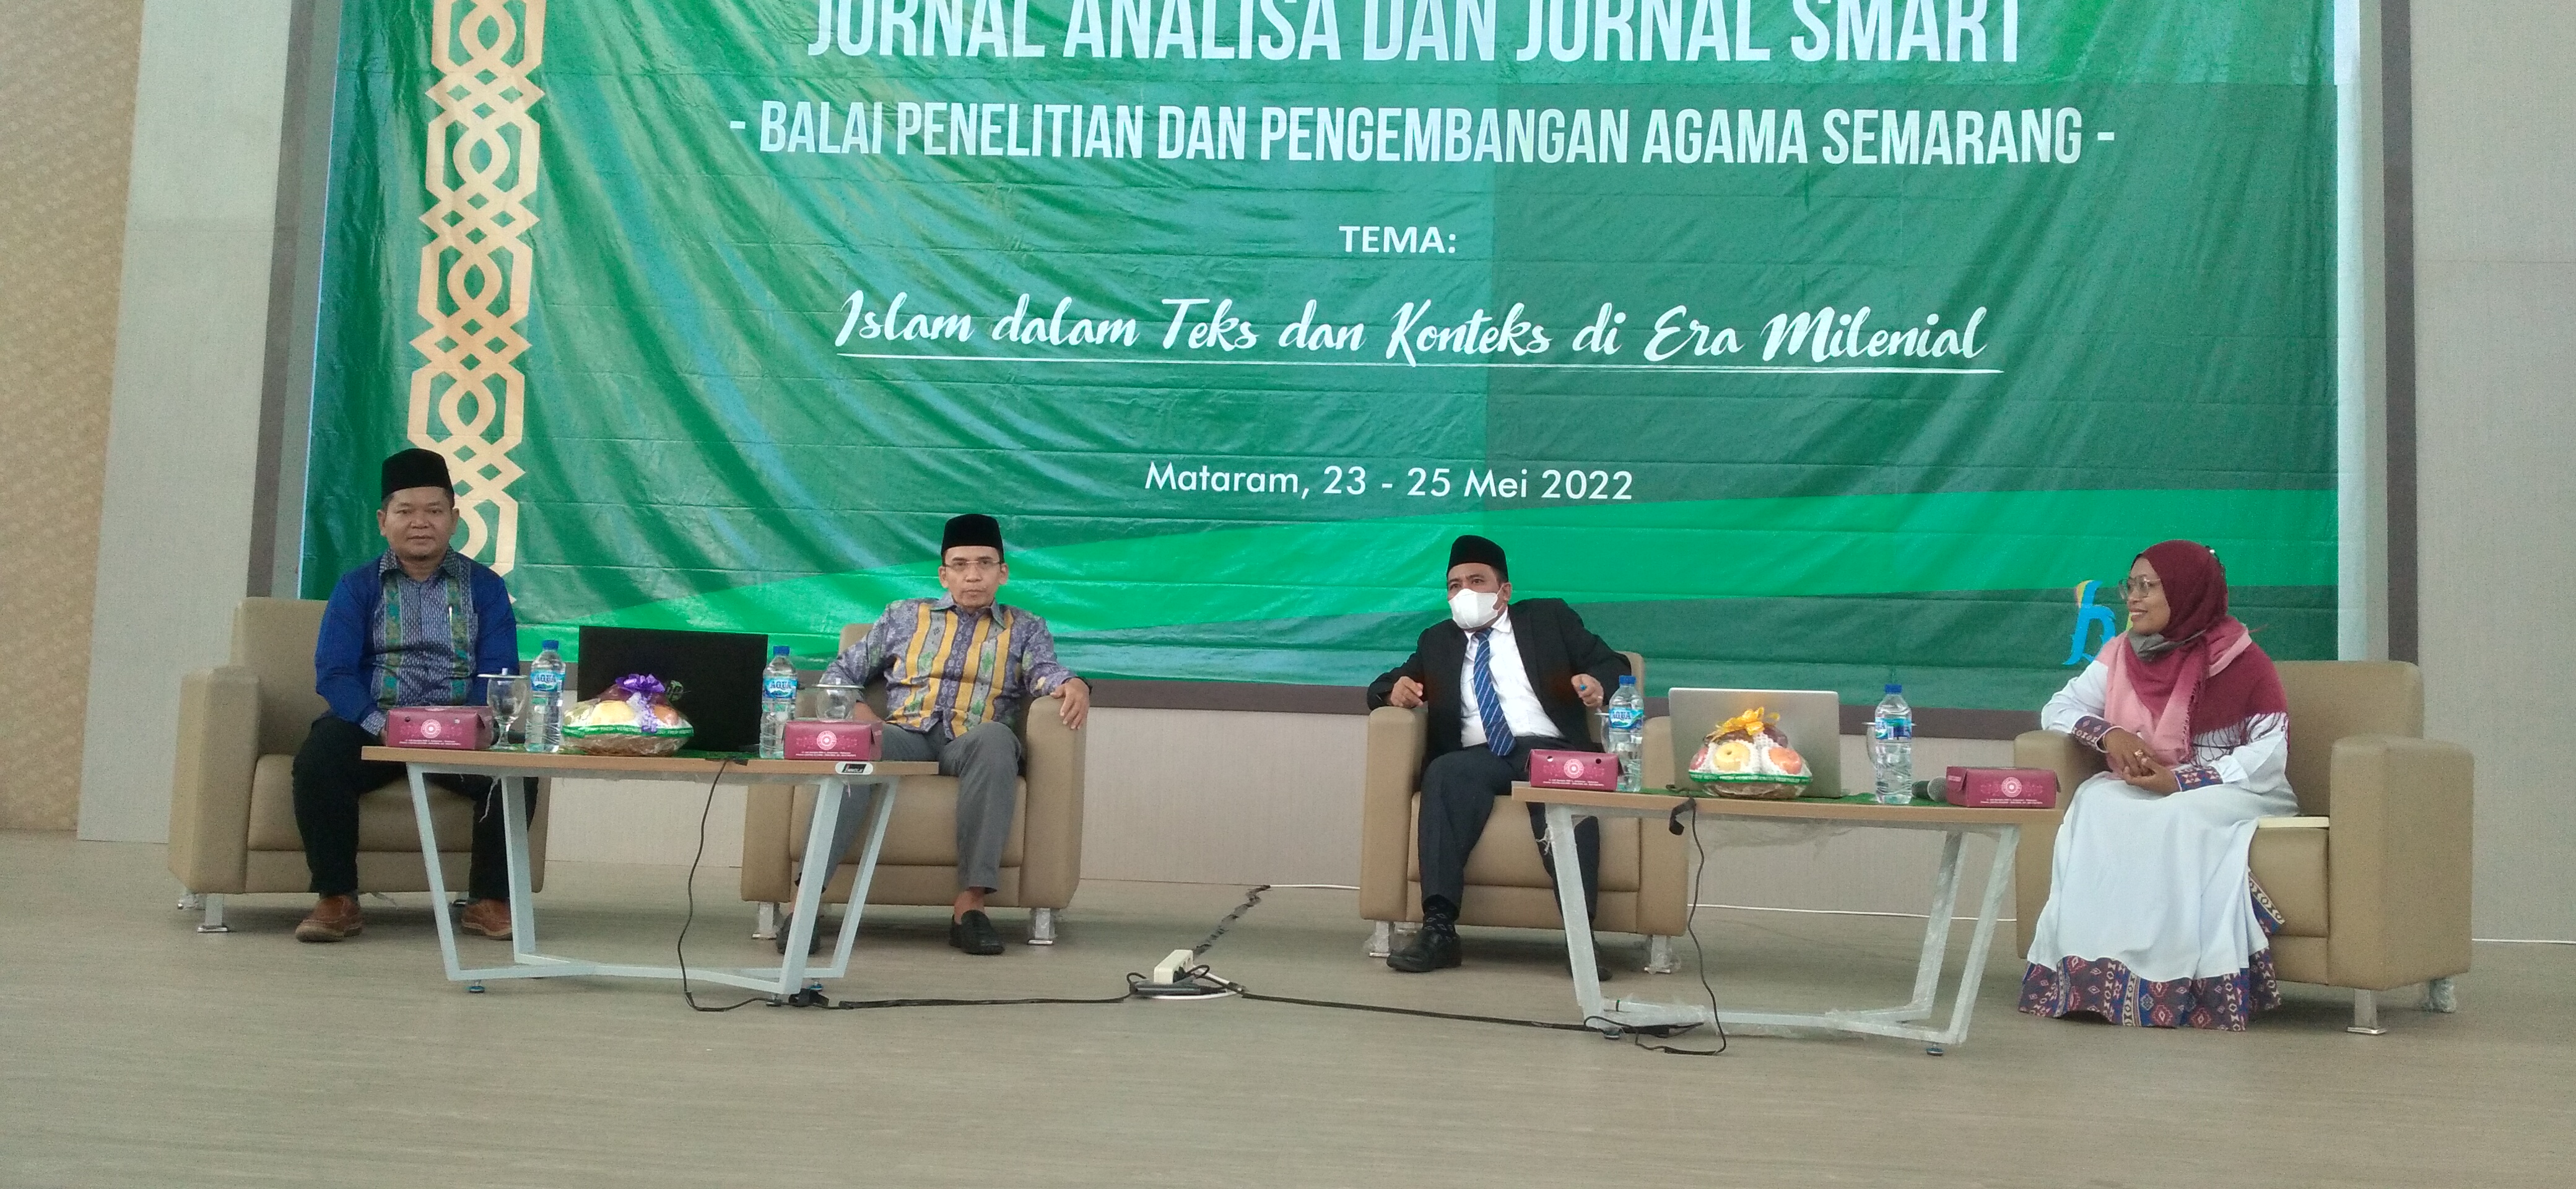 Balai Litbang Agama Semarang Gelar Acara di UIN Mataram